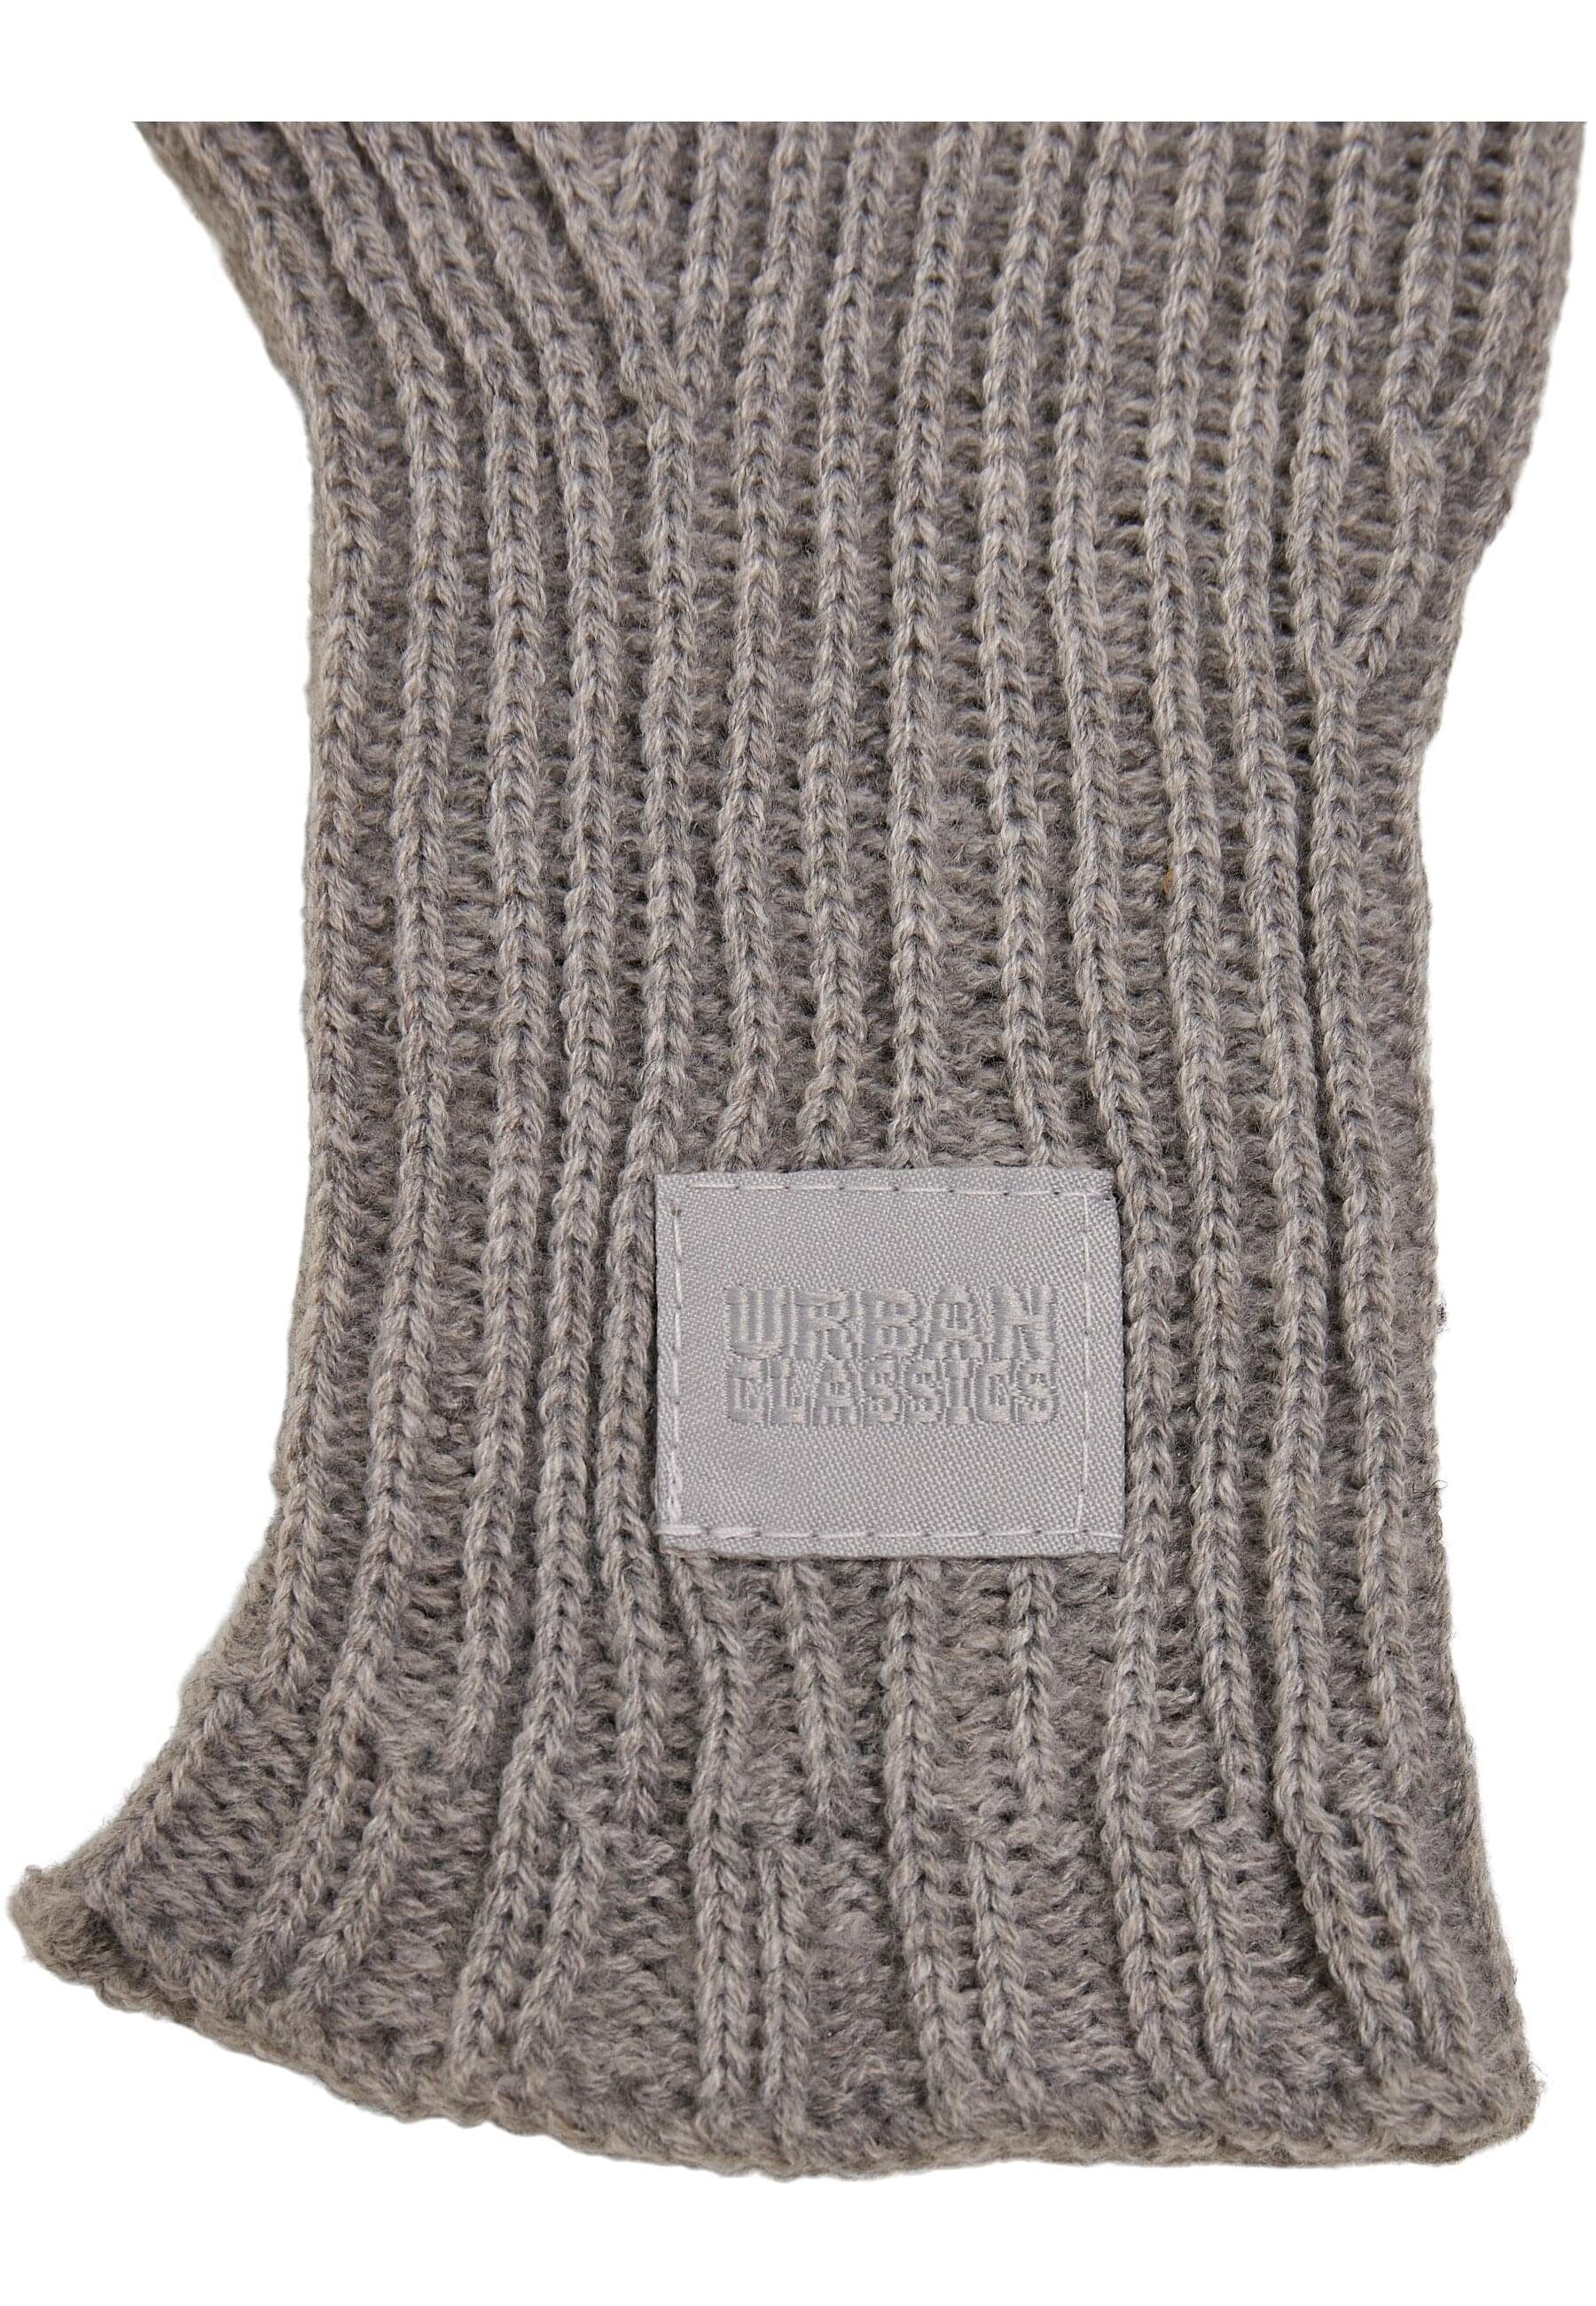 URBAN CLASSICS Baumwollhandschuhe Mix Smart Gloves Knitted Unisex Wool heathergrey